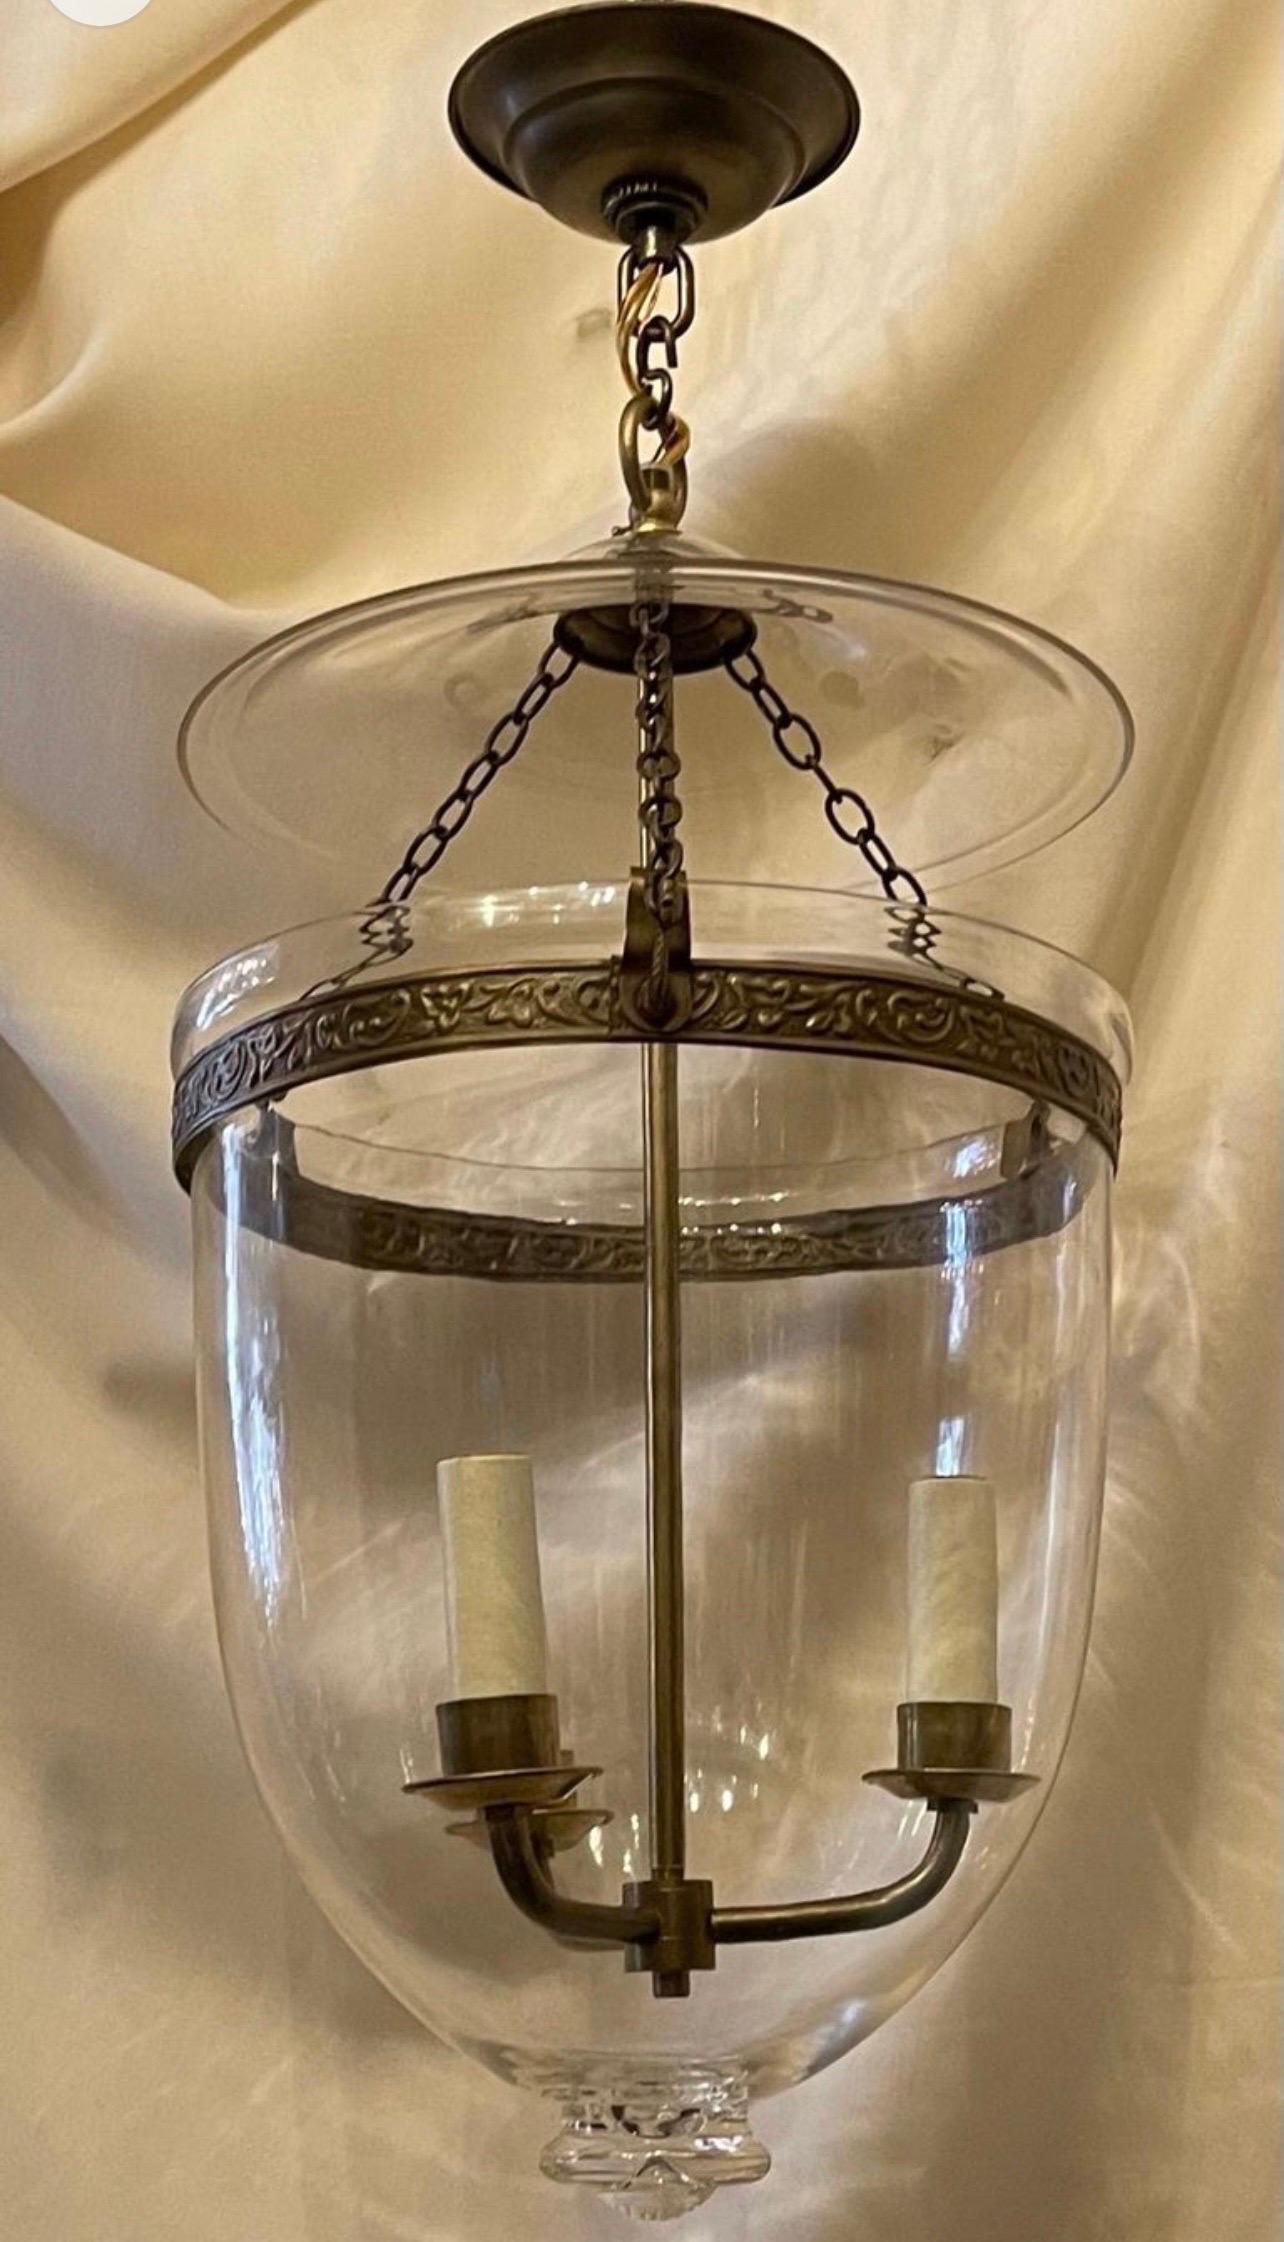 A fine English regency style brass / bronze bell jar blown glass lantern fixture by Vaughan Designs

